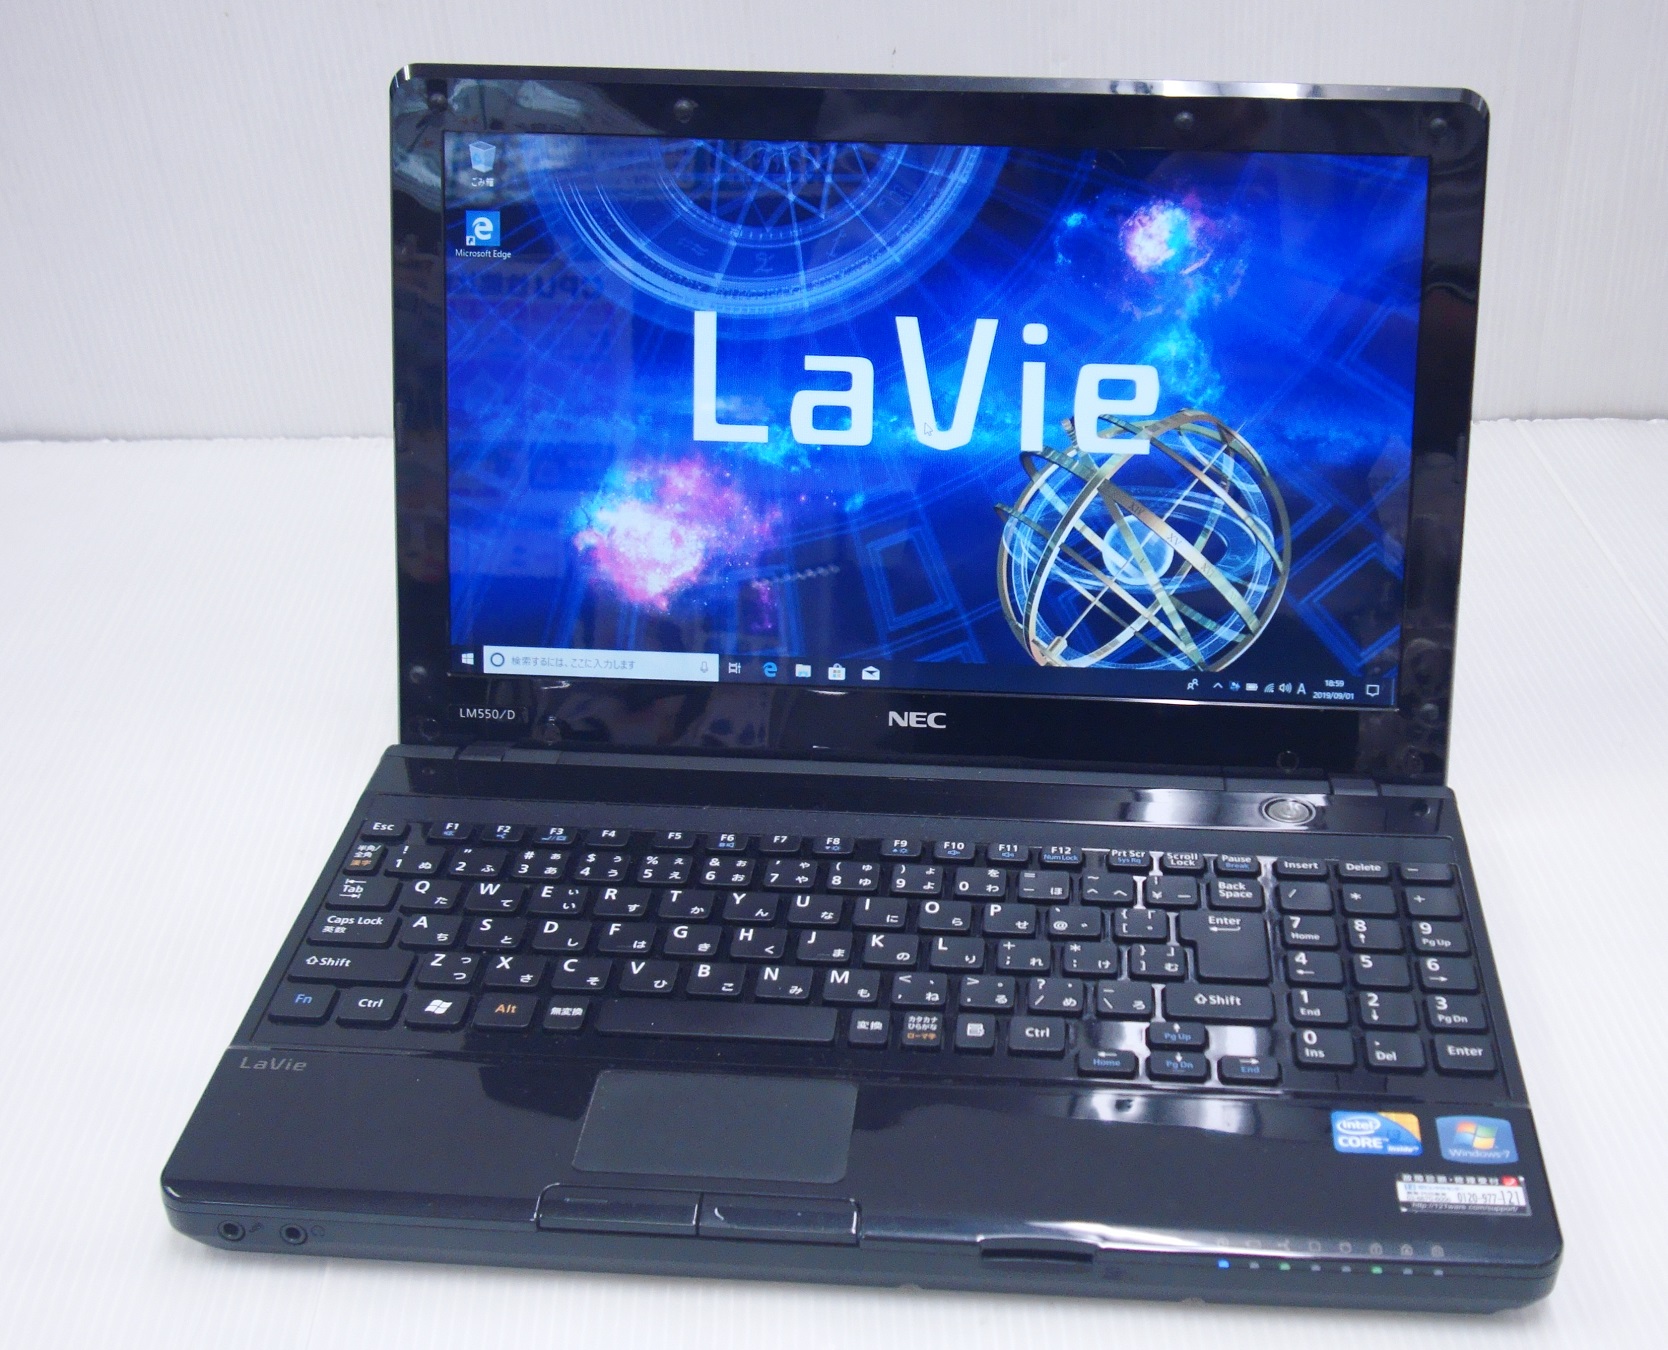 NEC LaVie PC-LM550/D CPU:Corei3 U370 1.33GHz / メモリ:4GB / HDD 